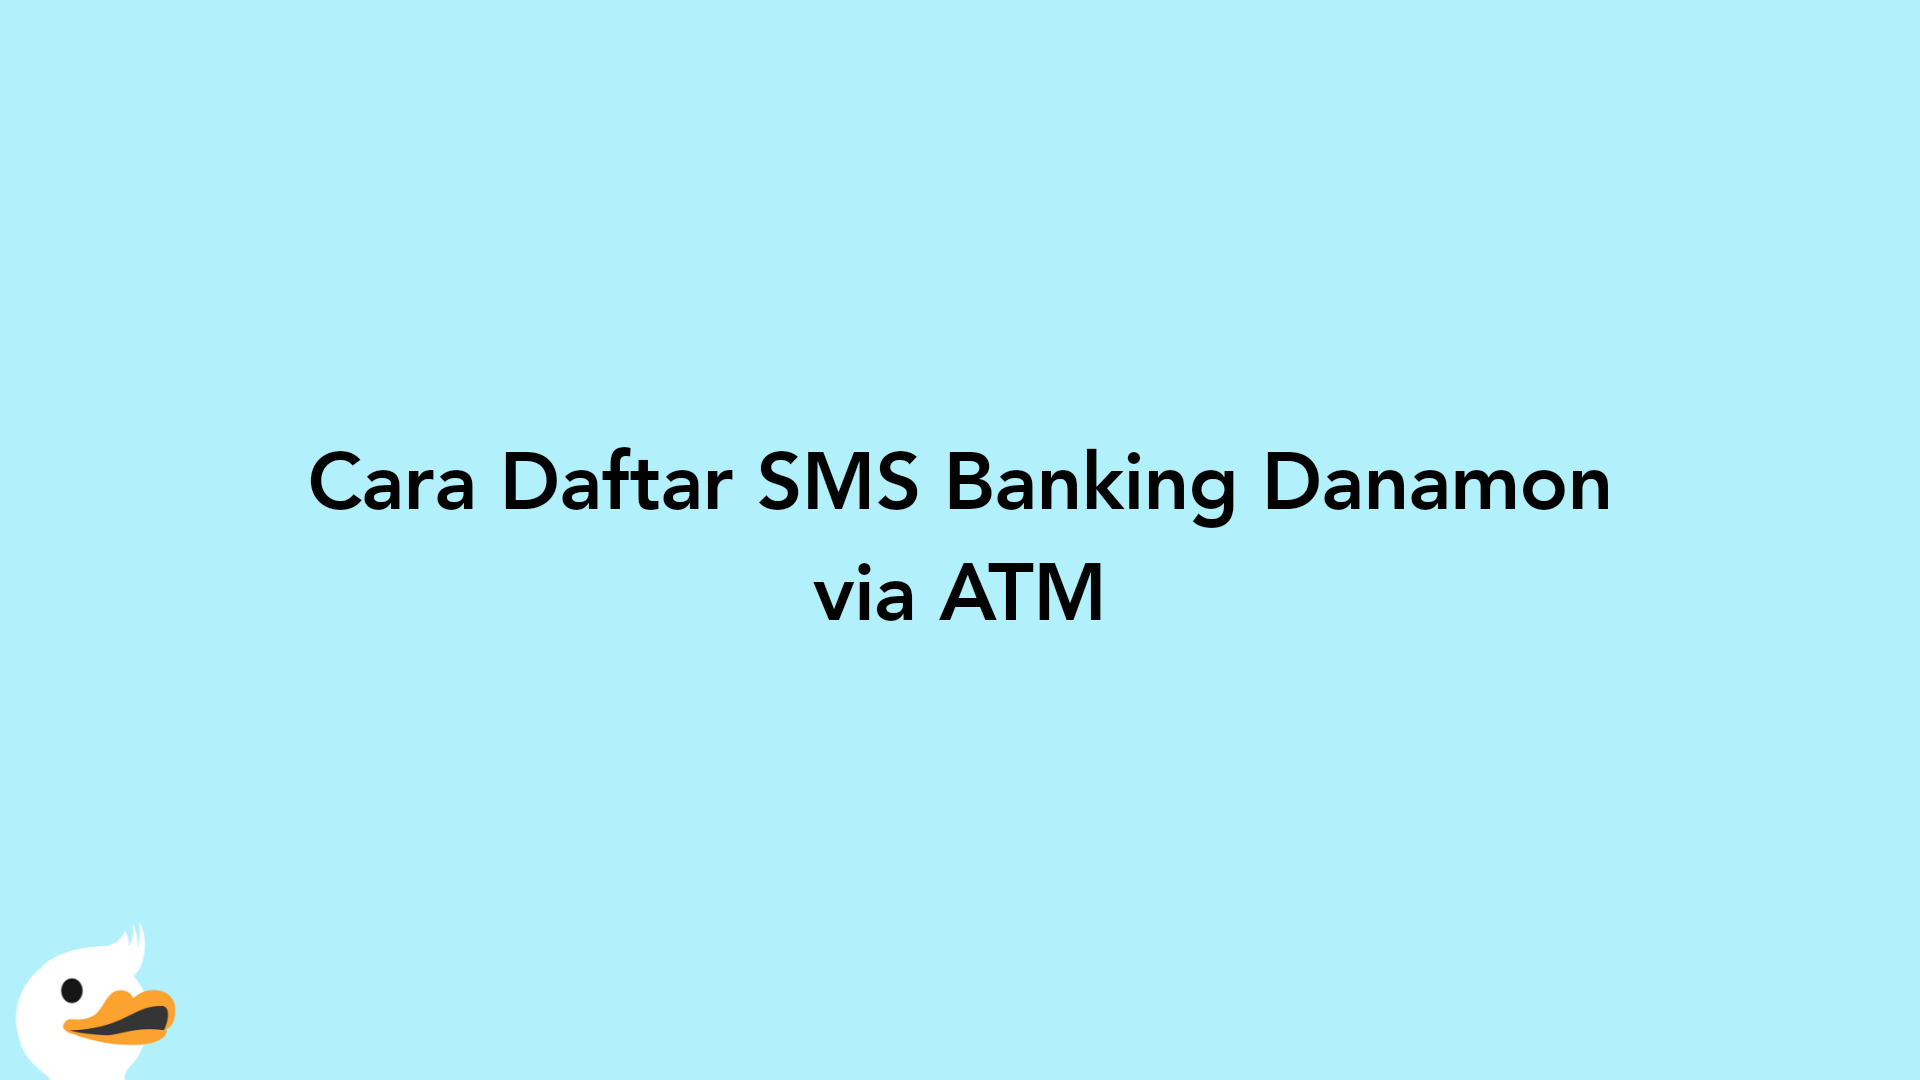 Cara Daftar SMS Banking Danamon via ATM